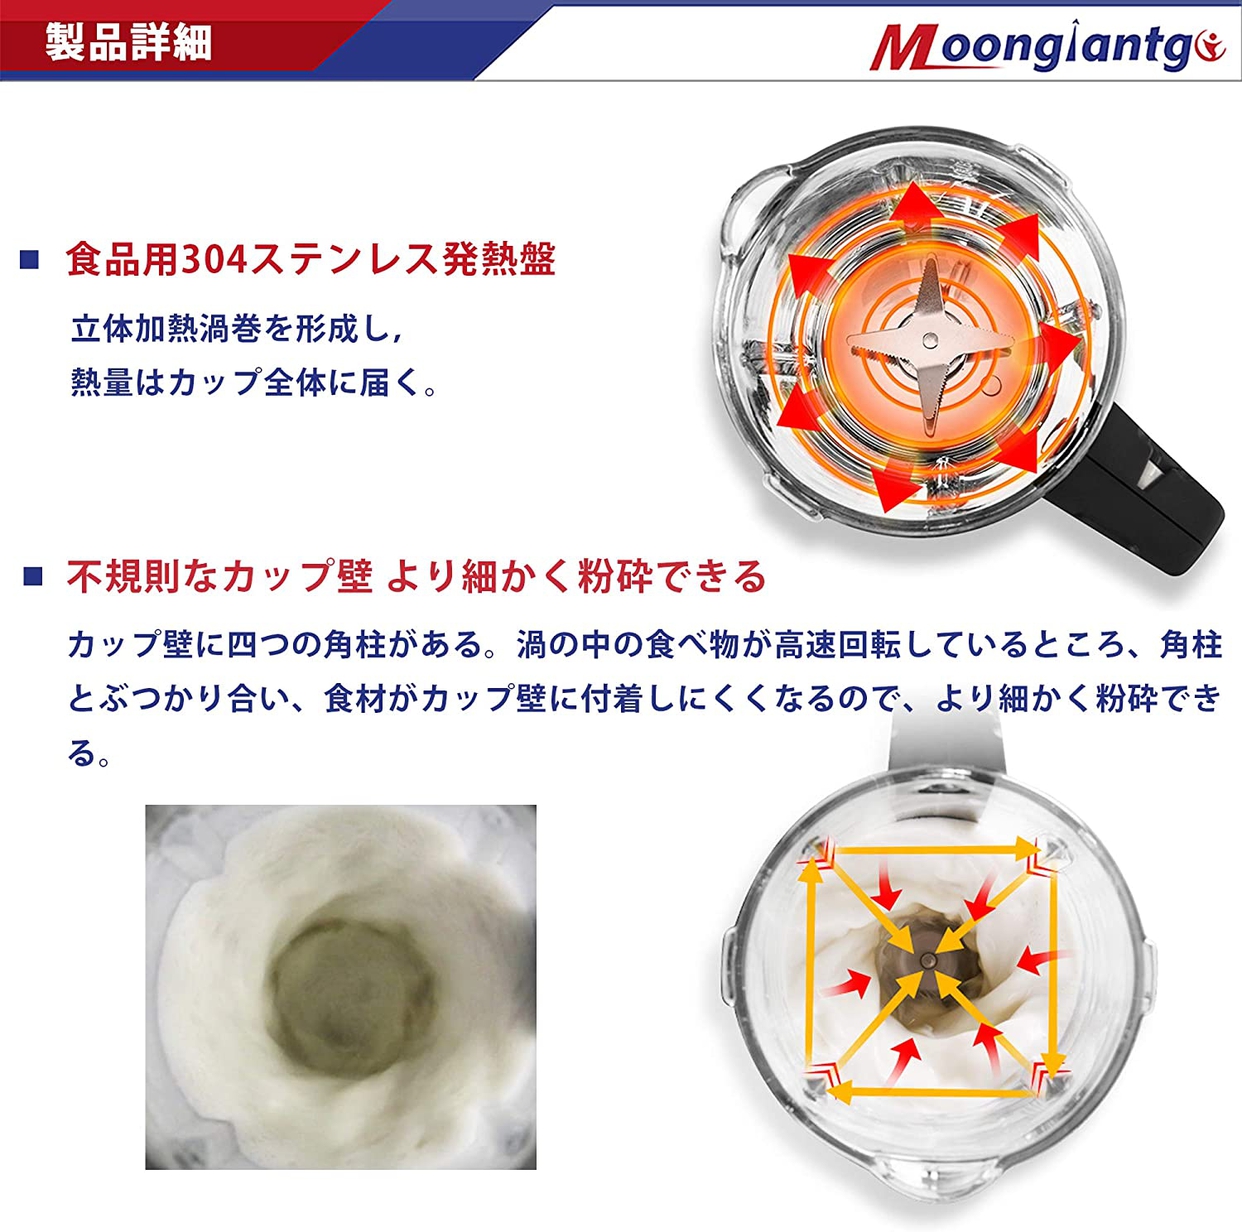 Moongiantgo(ムーンジャイアントゴー) 豆乳機 多機能調理器の商品画像サムネ2 